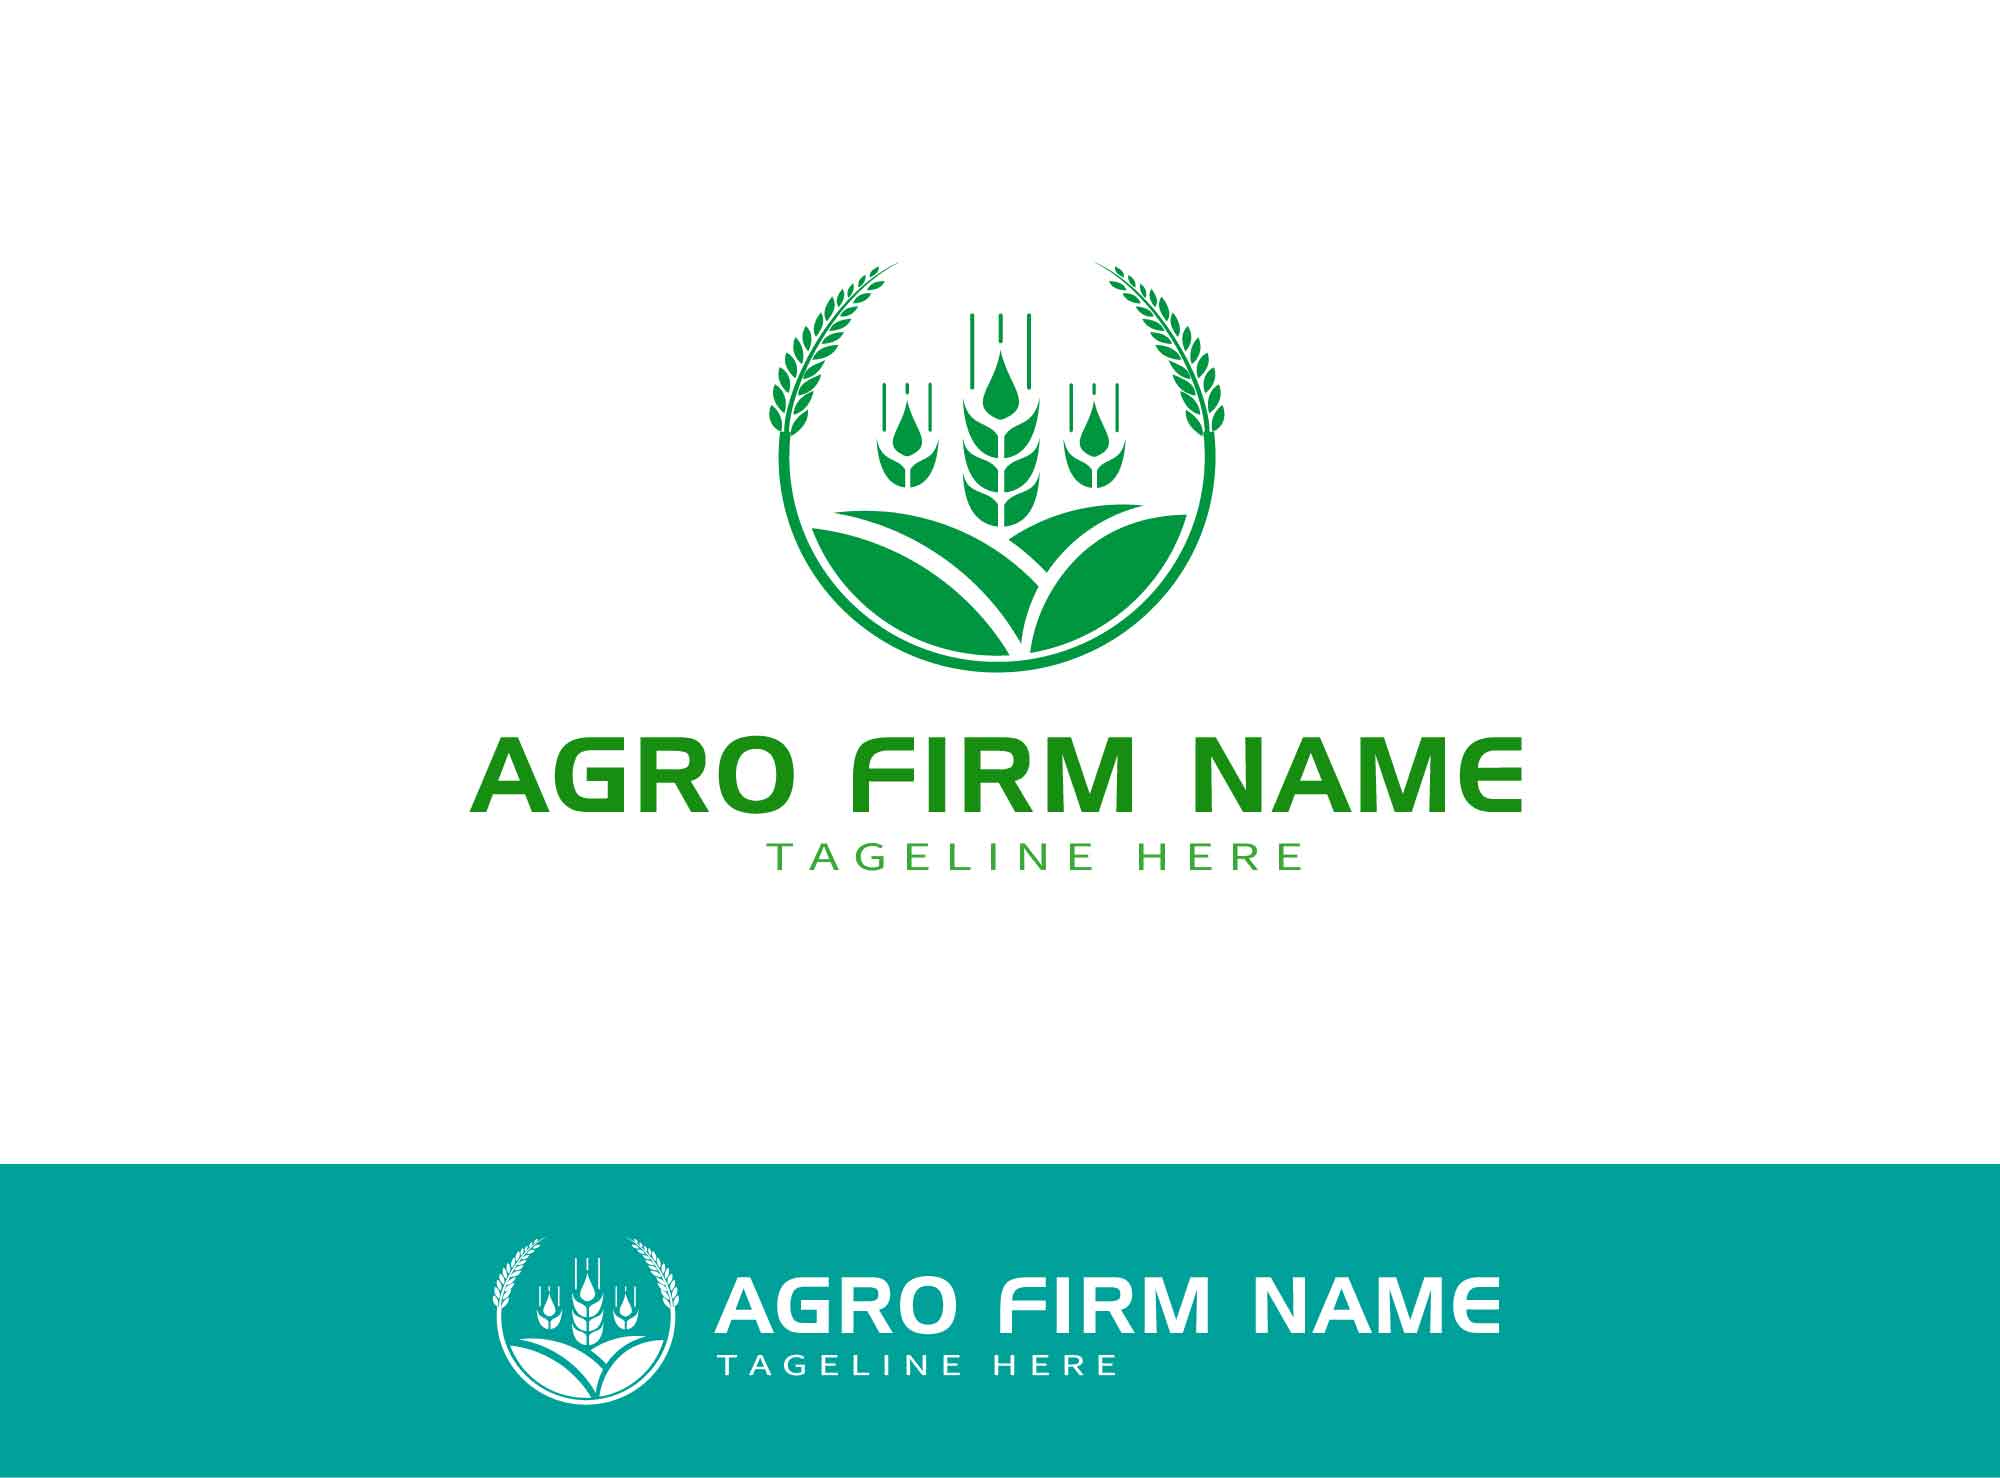 Agro firm logo design